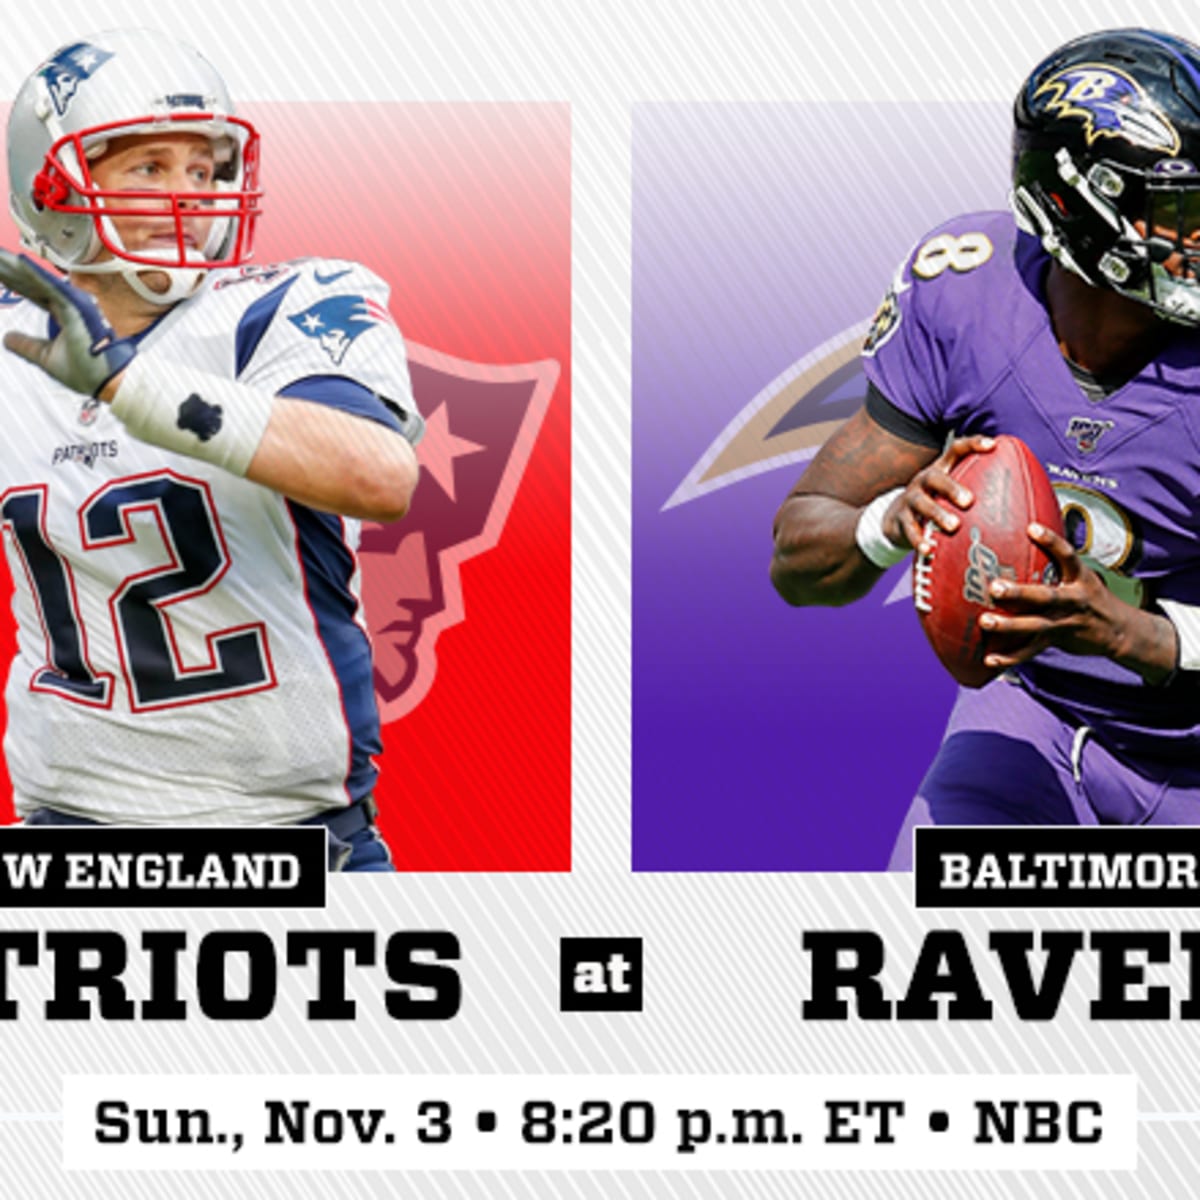 Sunday Night Football on NBC - Next week in prime time: Ravens vs. Patriots  